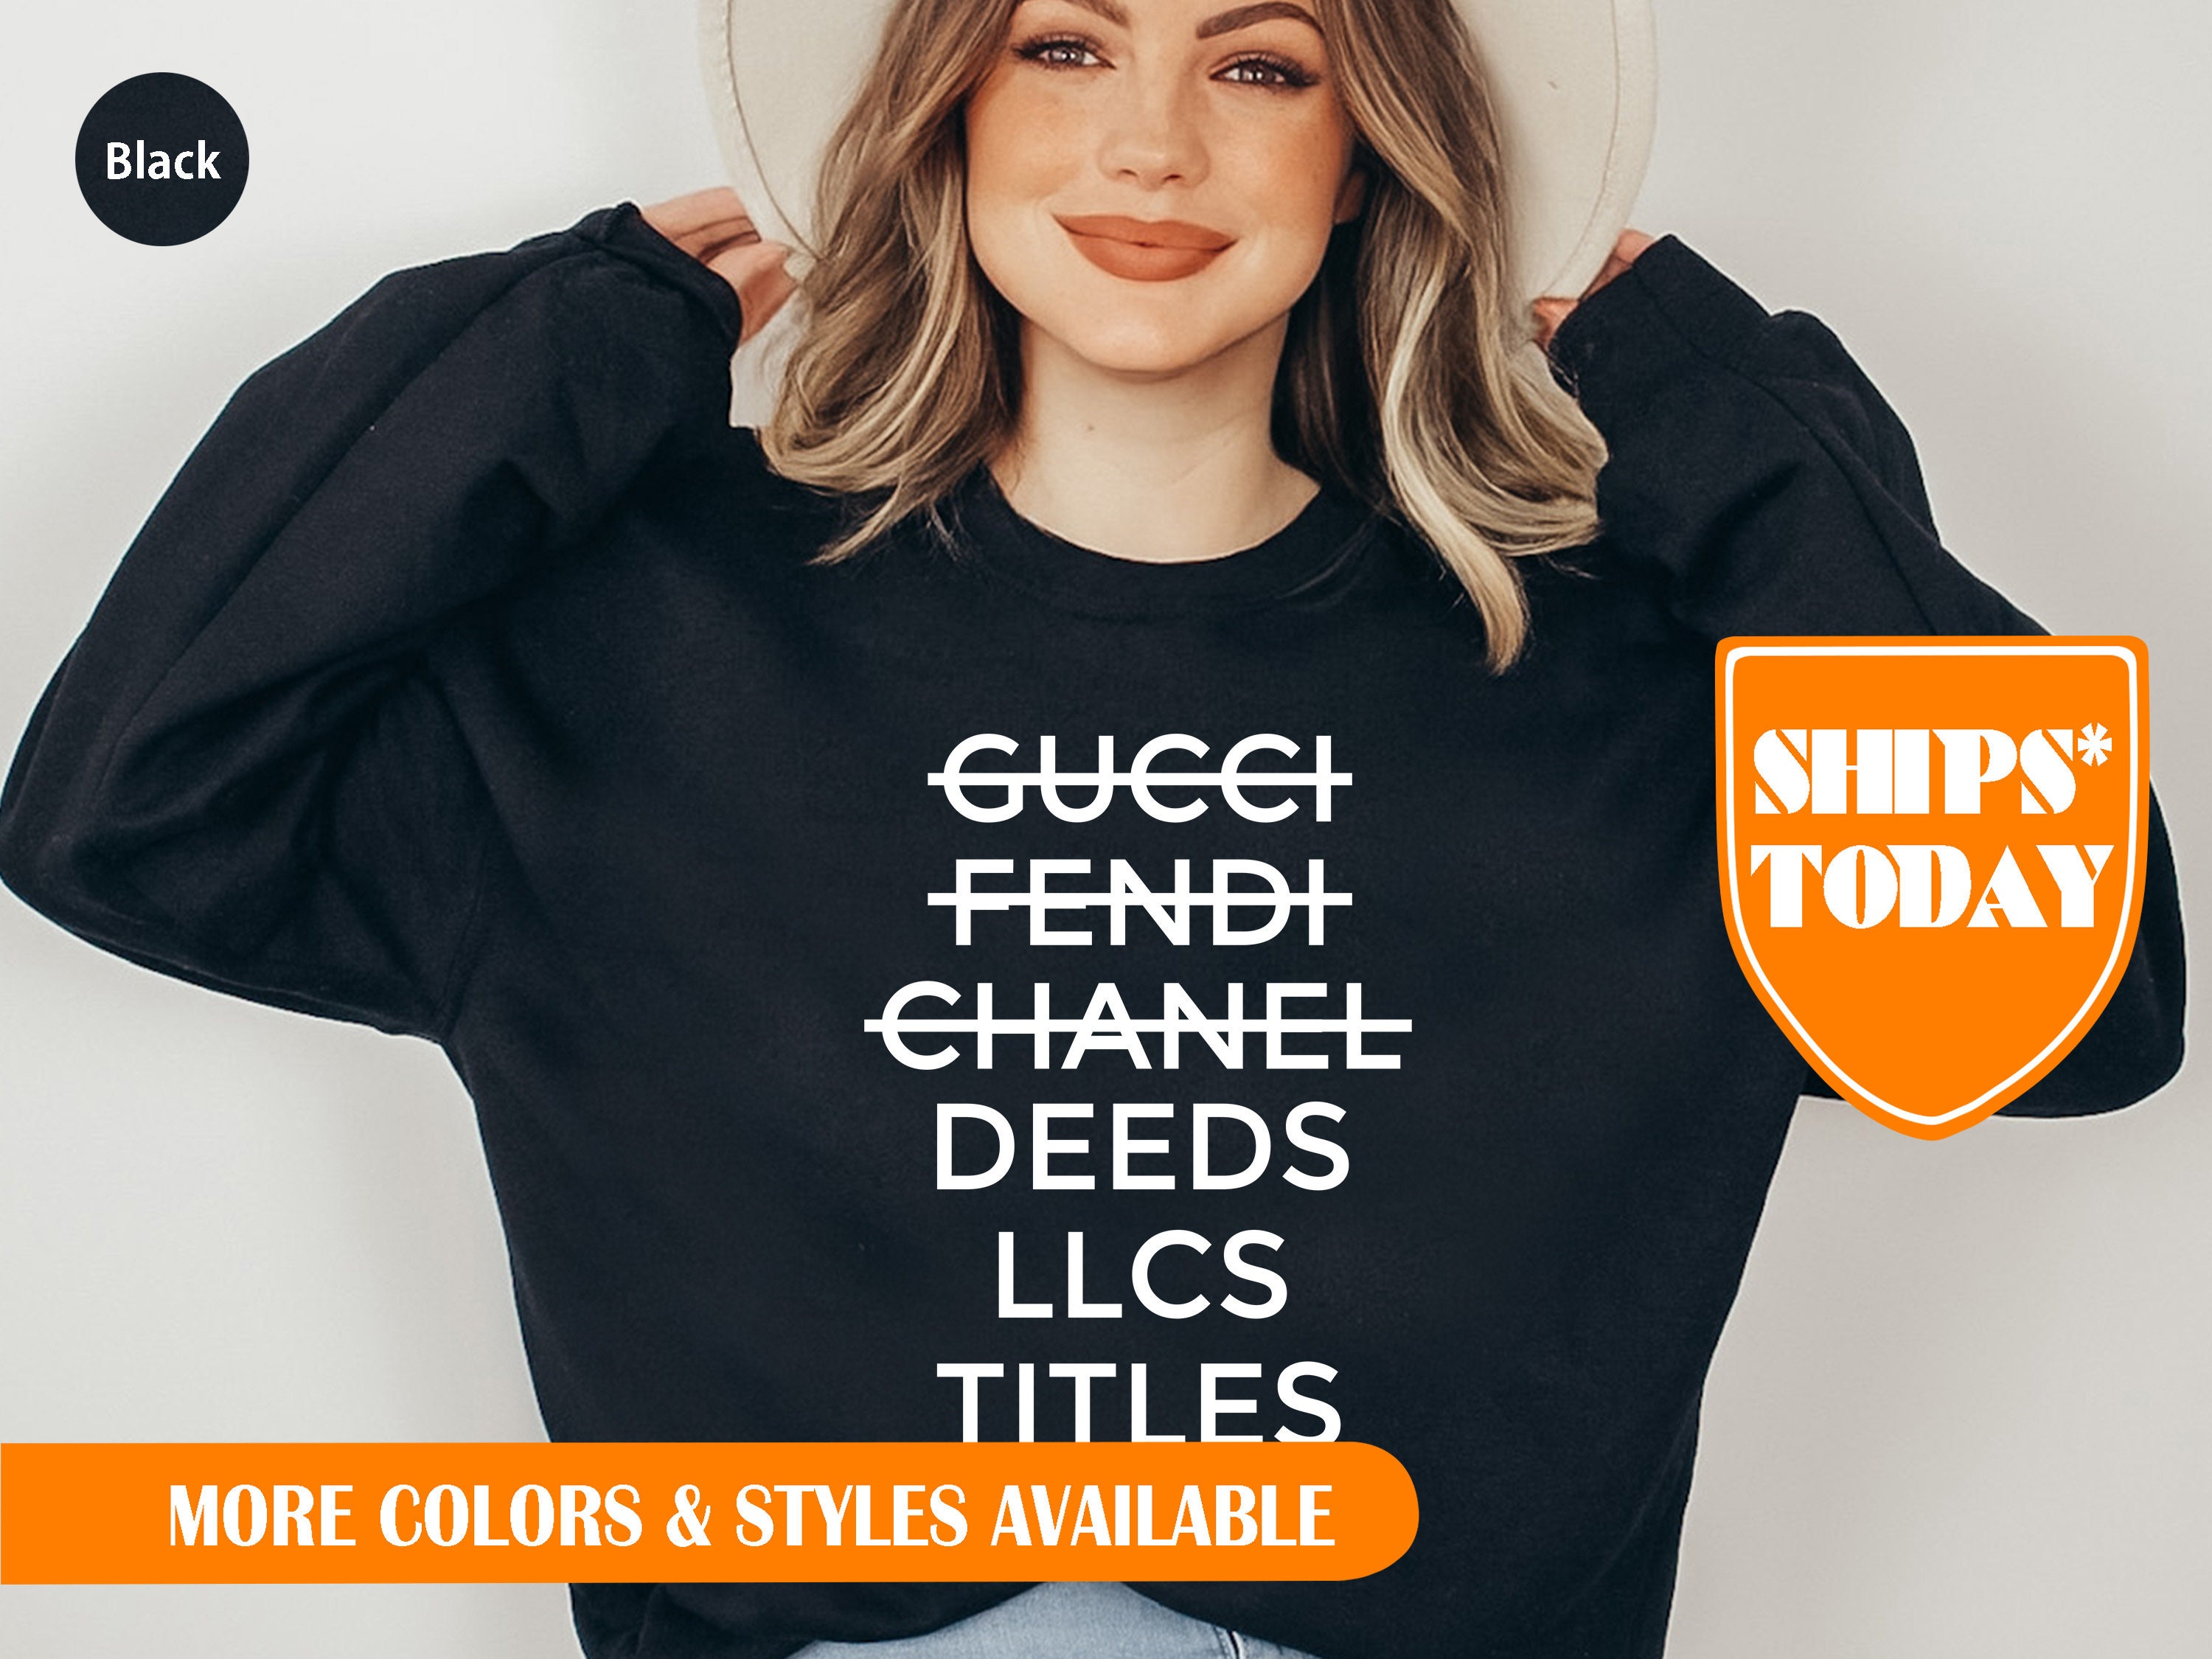 Gucci, Chanel, Fendi, Deeds, Titles and LLC's shirt design